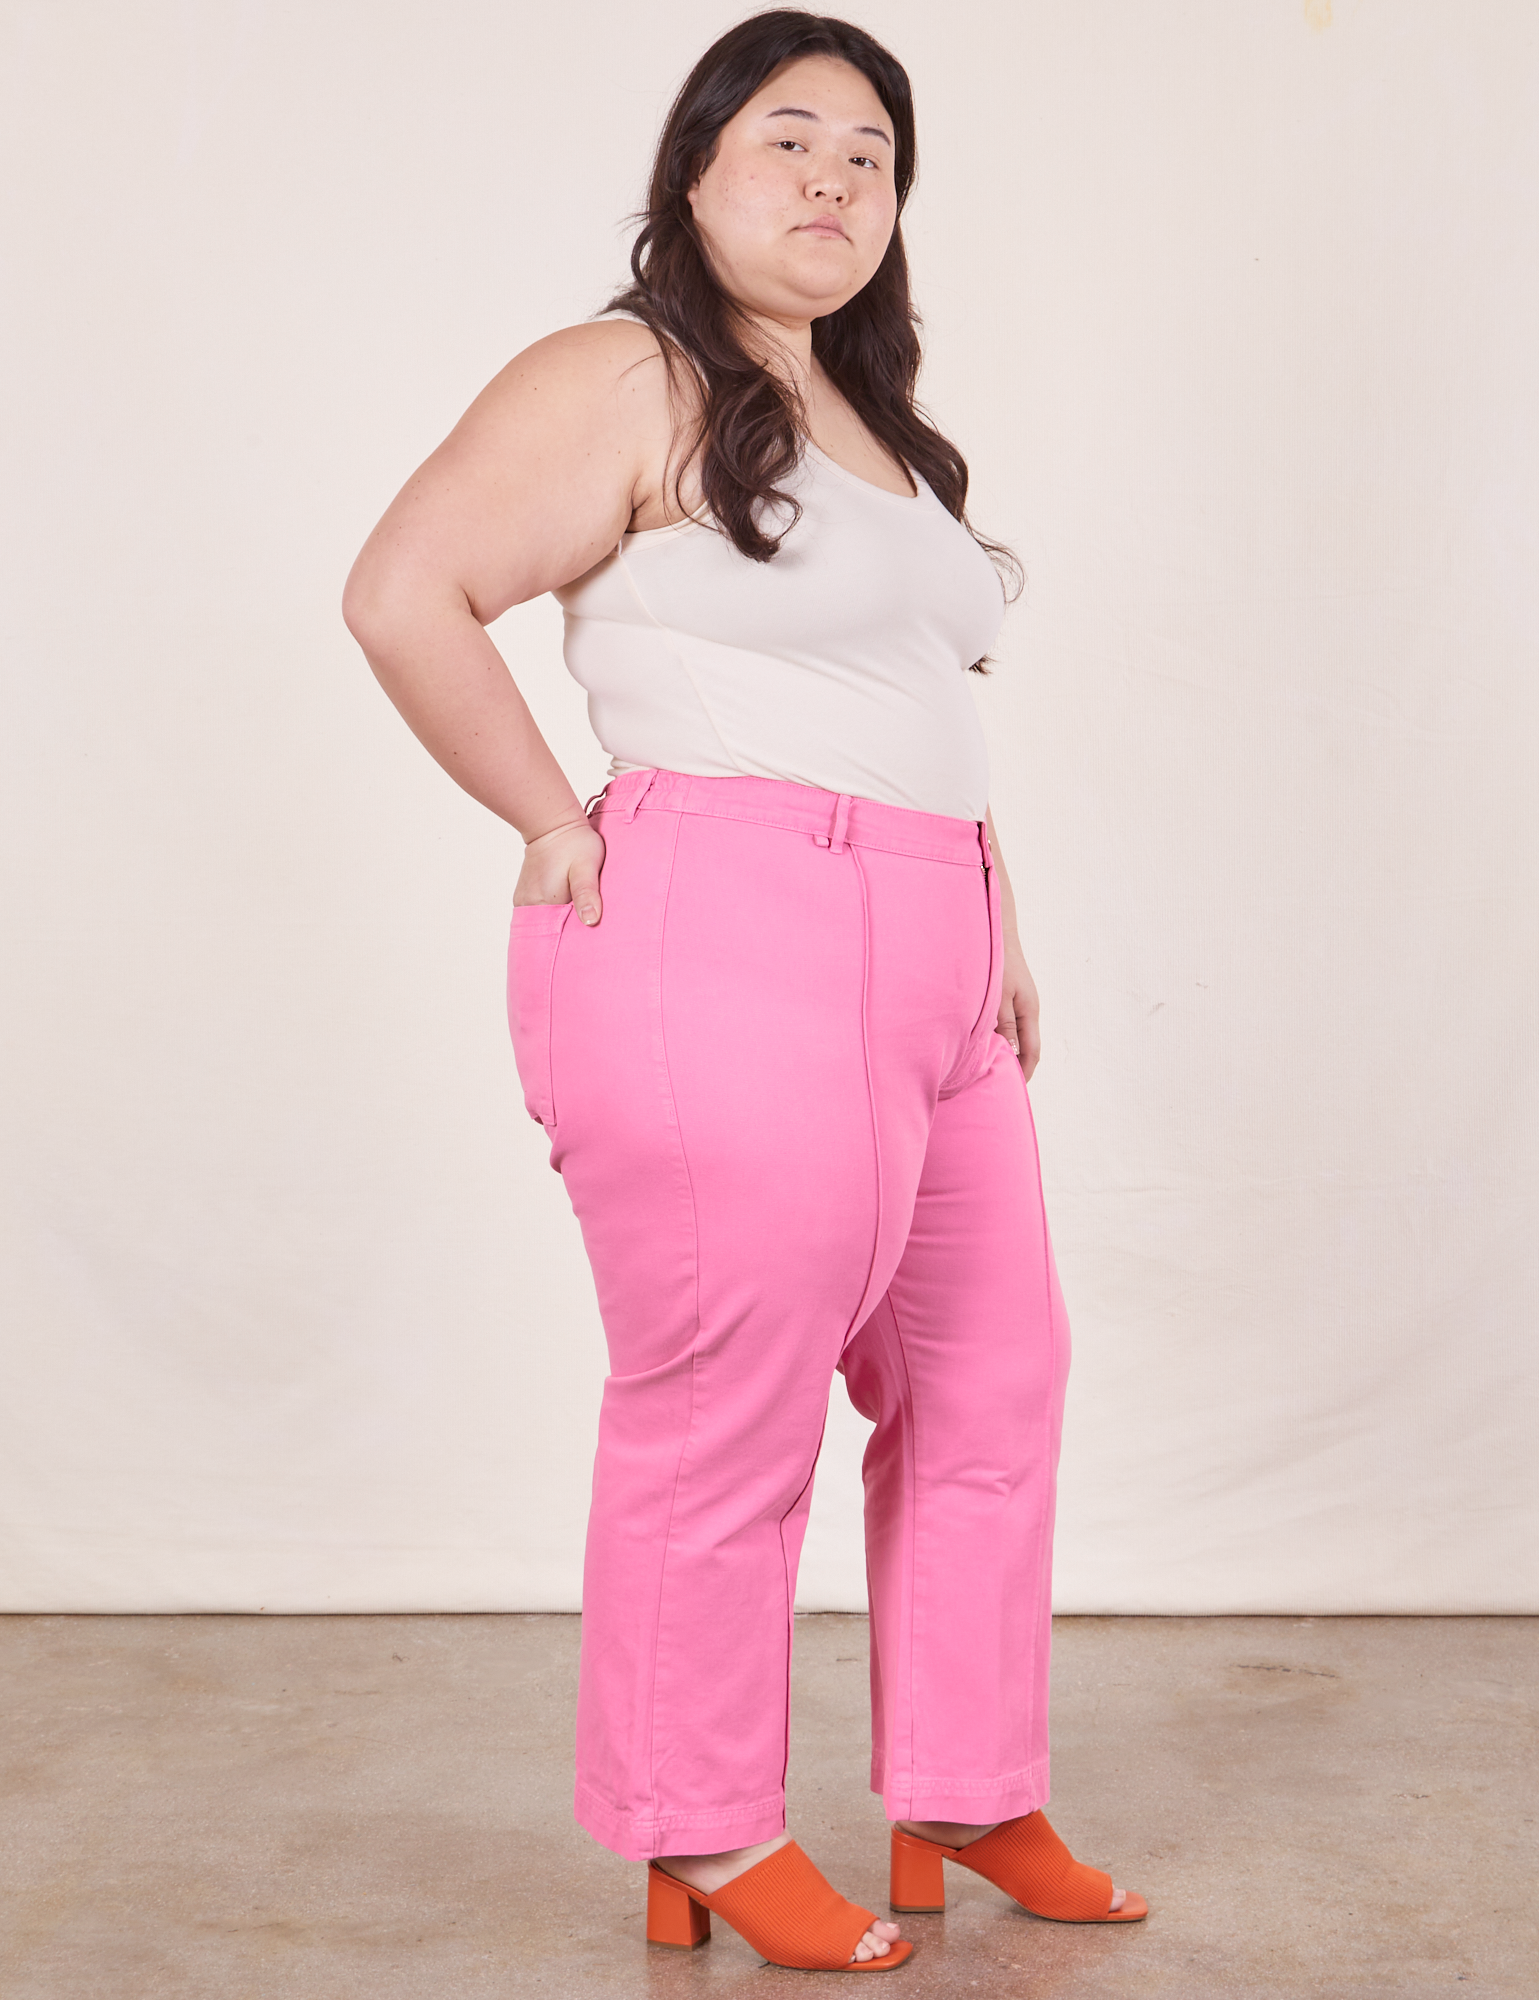 Western Pants in Bubblegum Pink side view on Ashley wearing Tank Top in vintage tee off-white